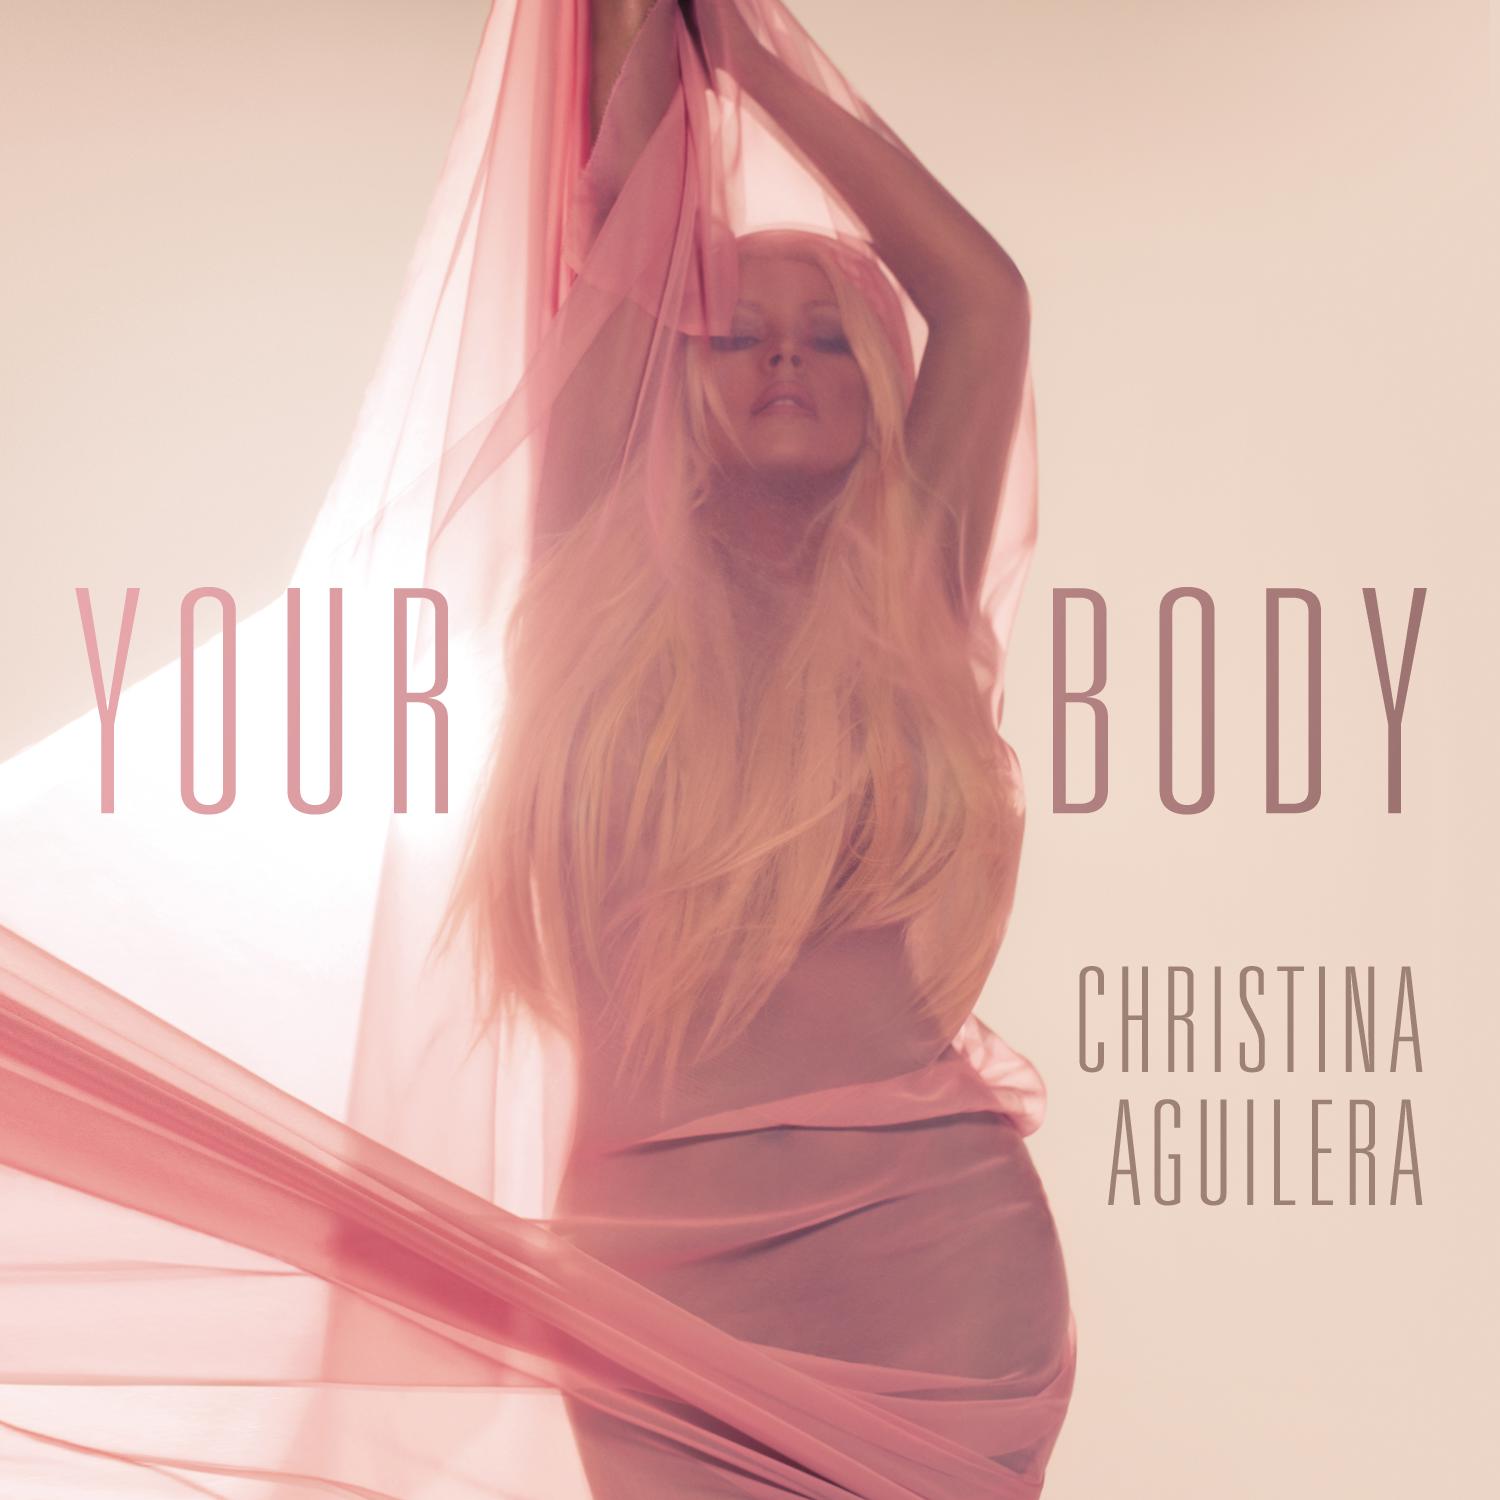 http://1.bp.blogspot.com/-1dwIUqsc0Os/UGXGIptuNhI/AAAAAAAACas/yWqSwfMXEjo/s1600/Christina+Aguilera+Your+Body.jpg